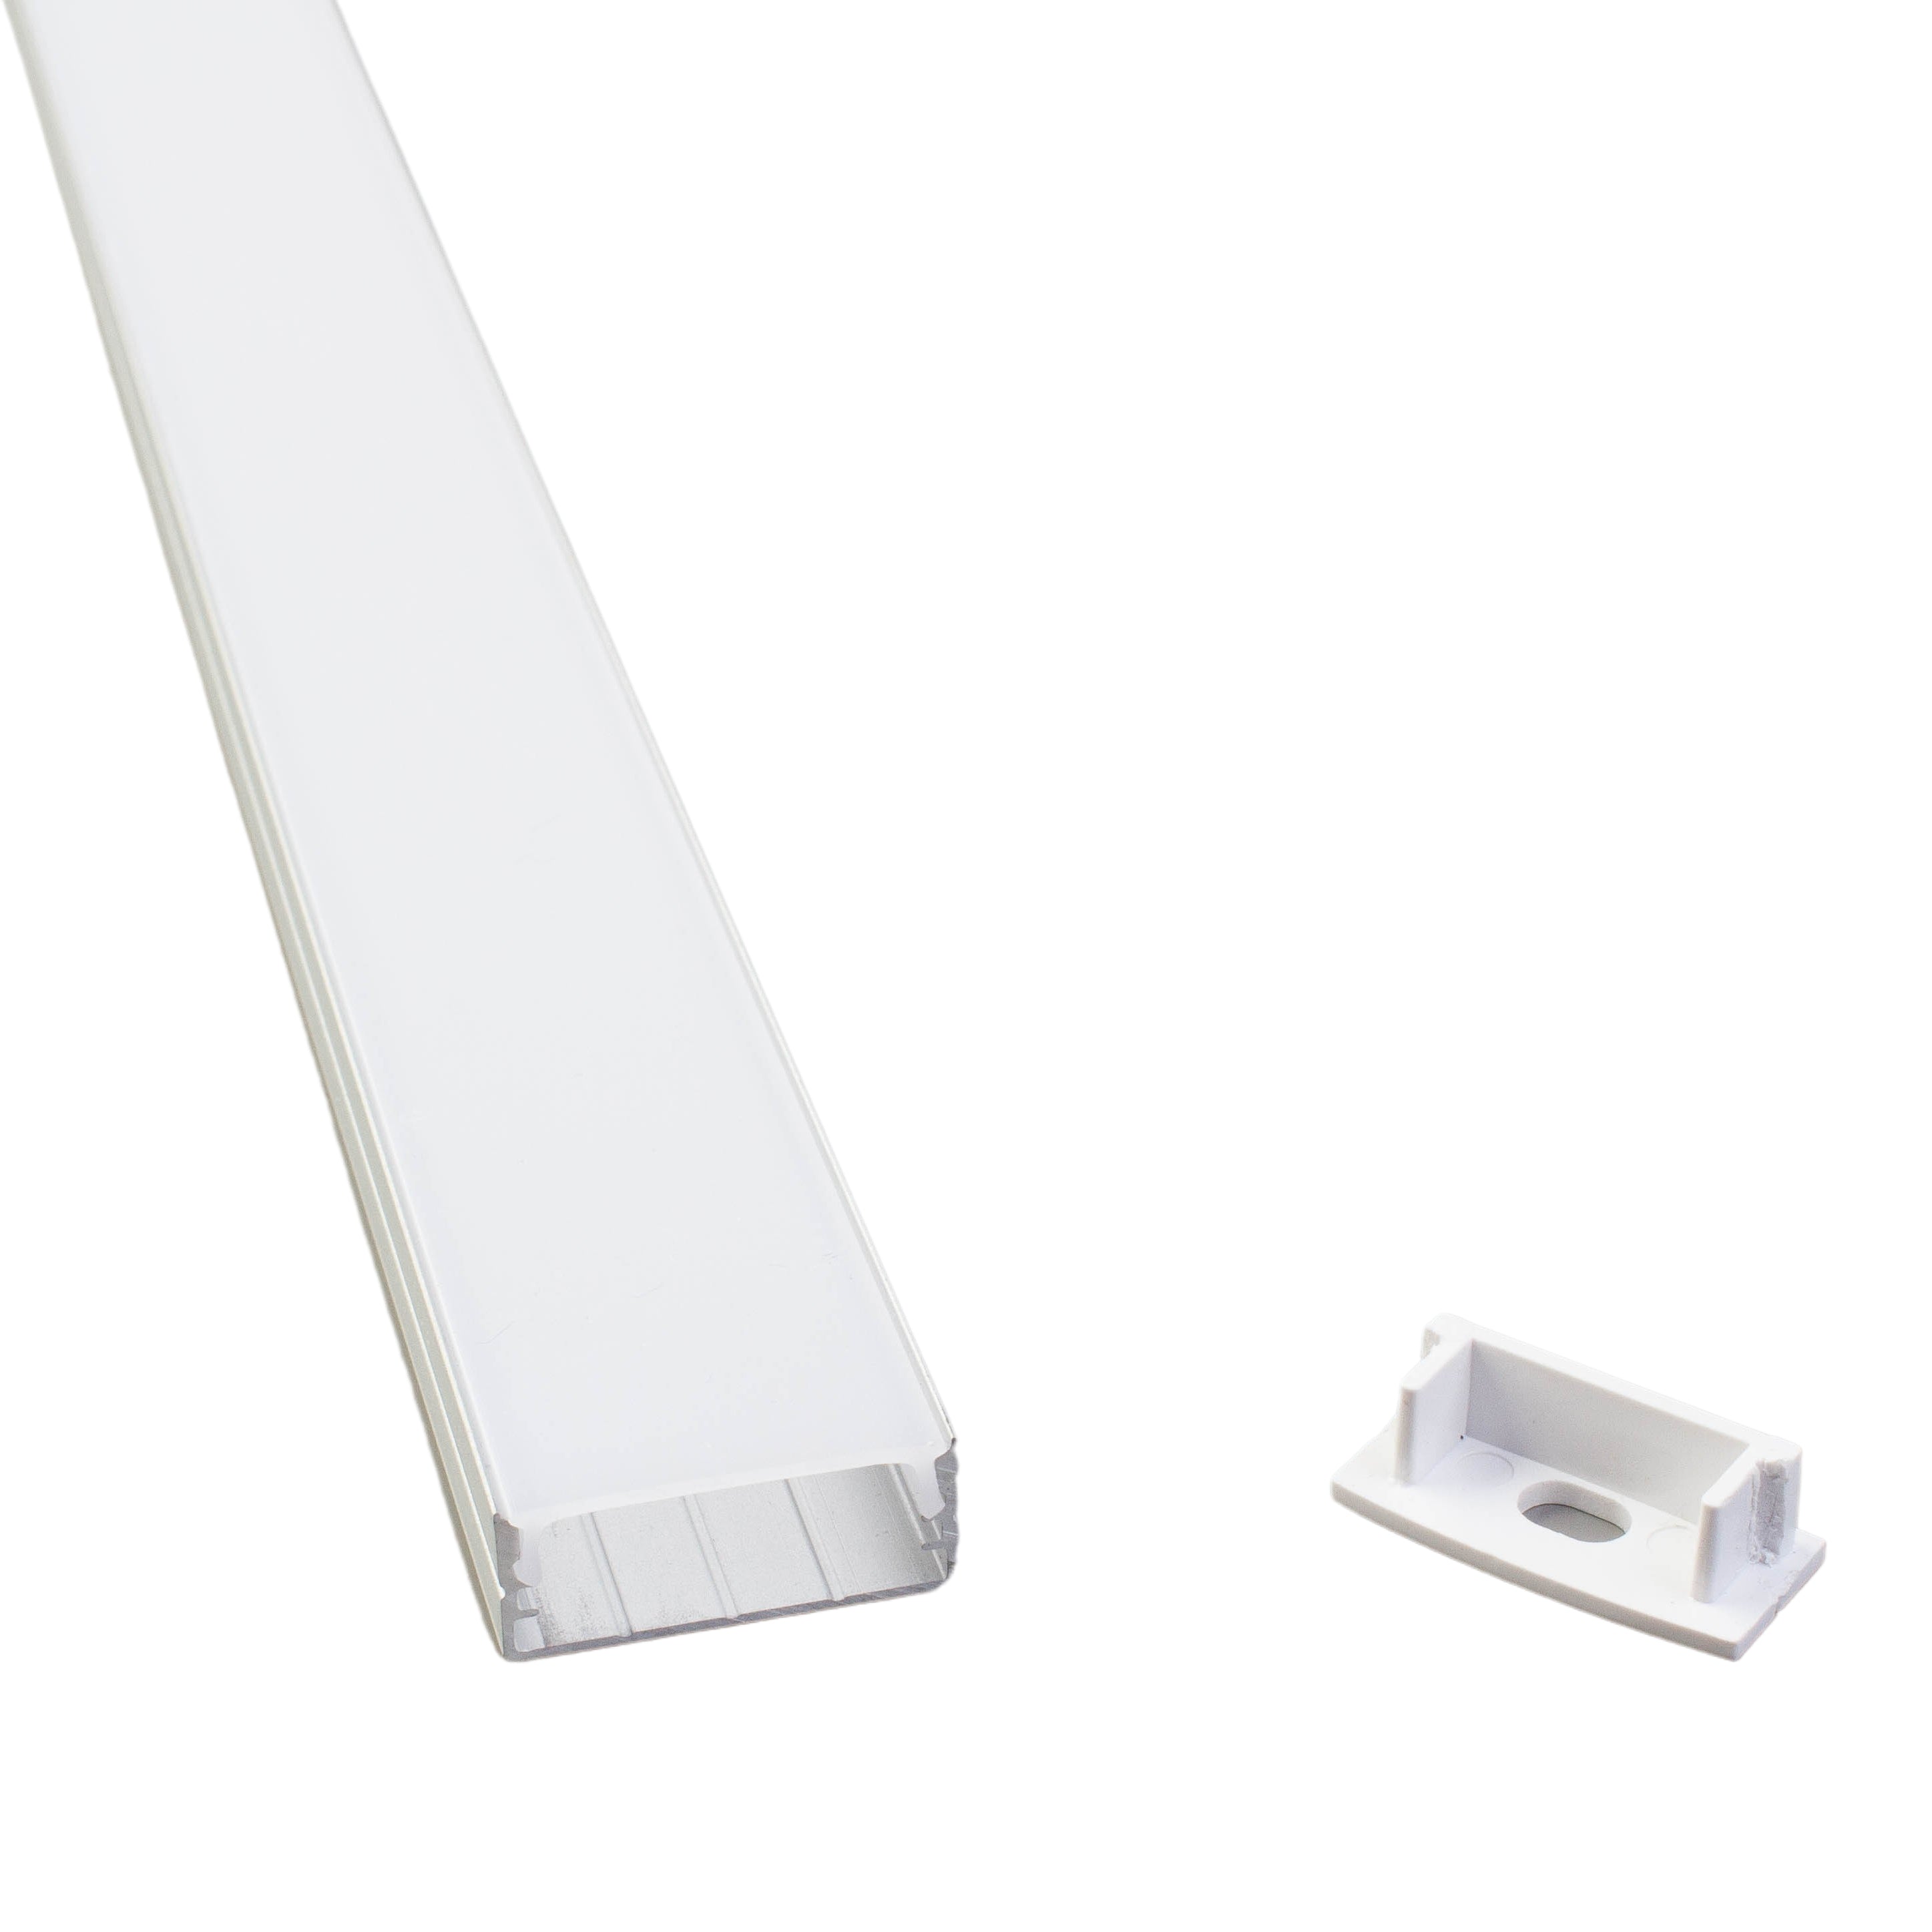 Aluminum Channel for LED Strip Lights